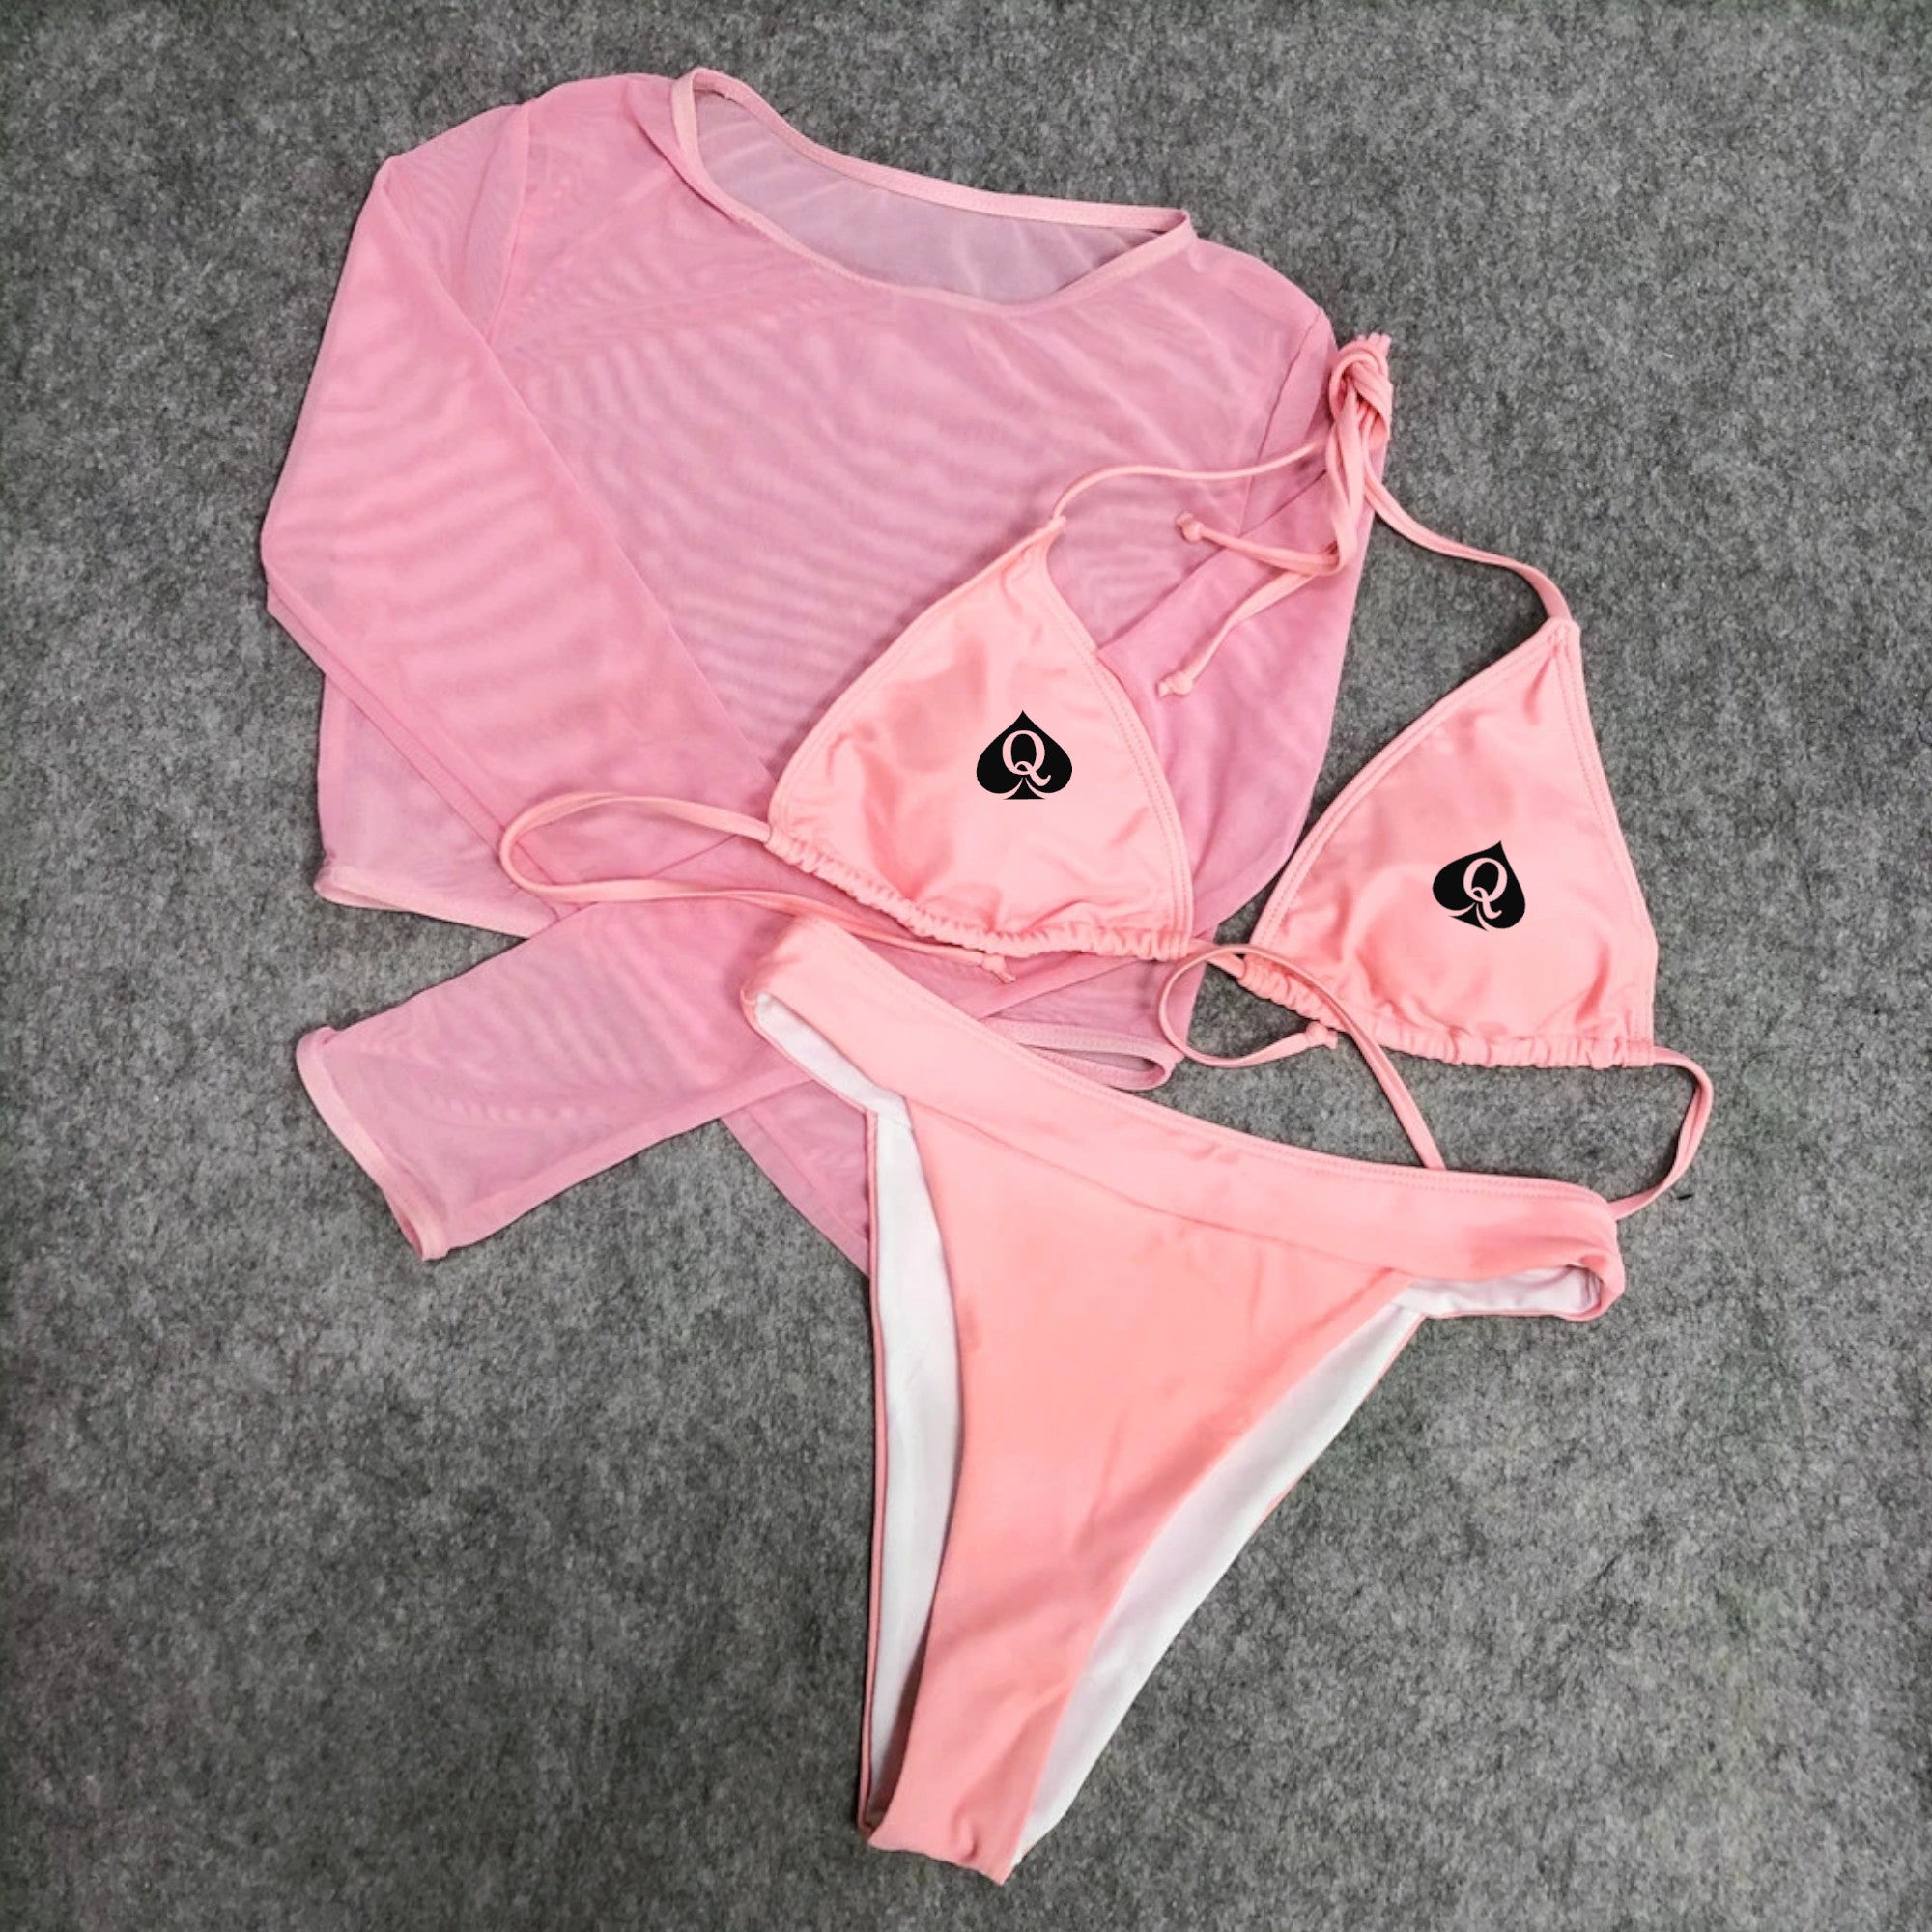 QOS Mesh Crop Top 3pc Bikini - Flesh Pink